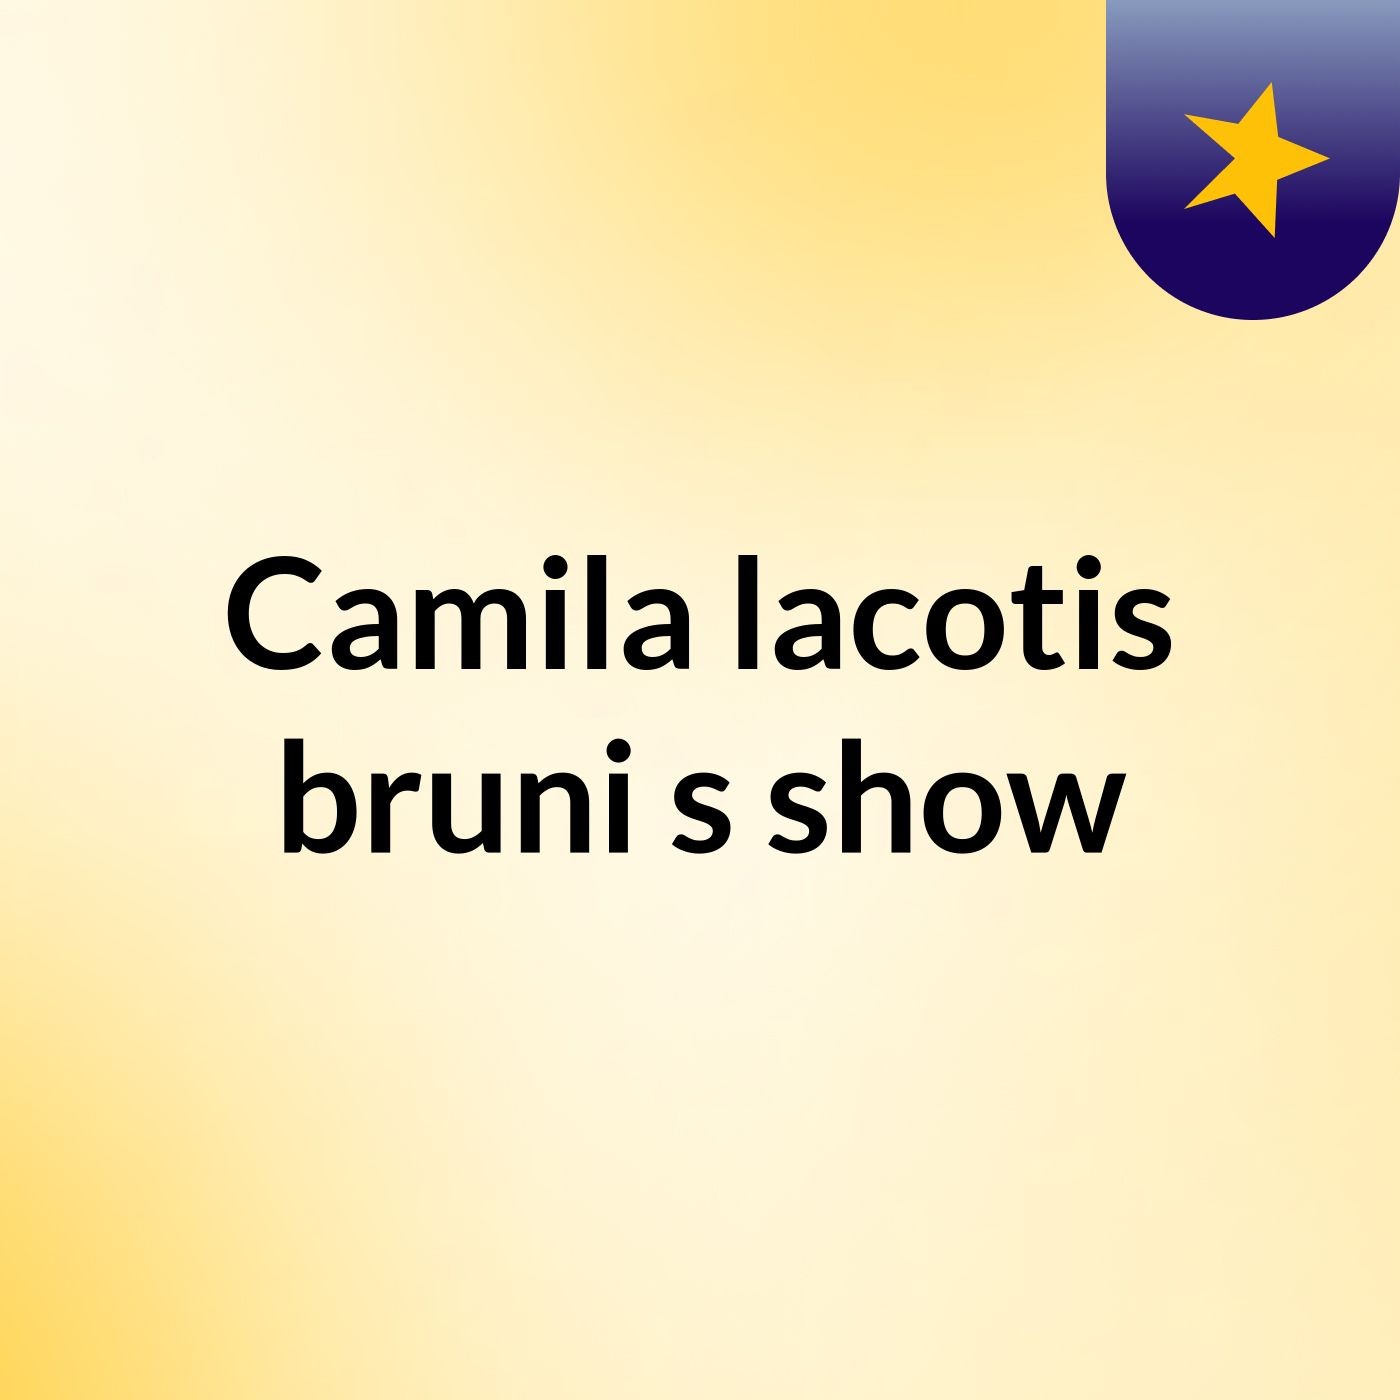 Camila lacotis bruni's show